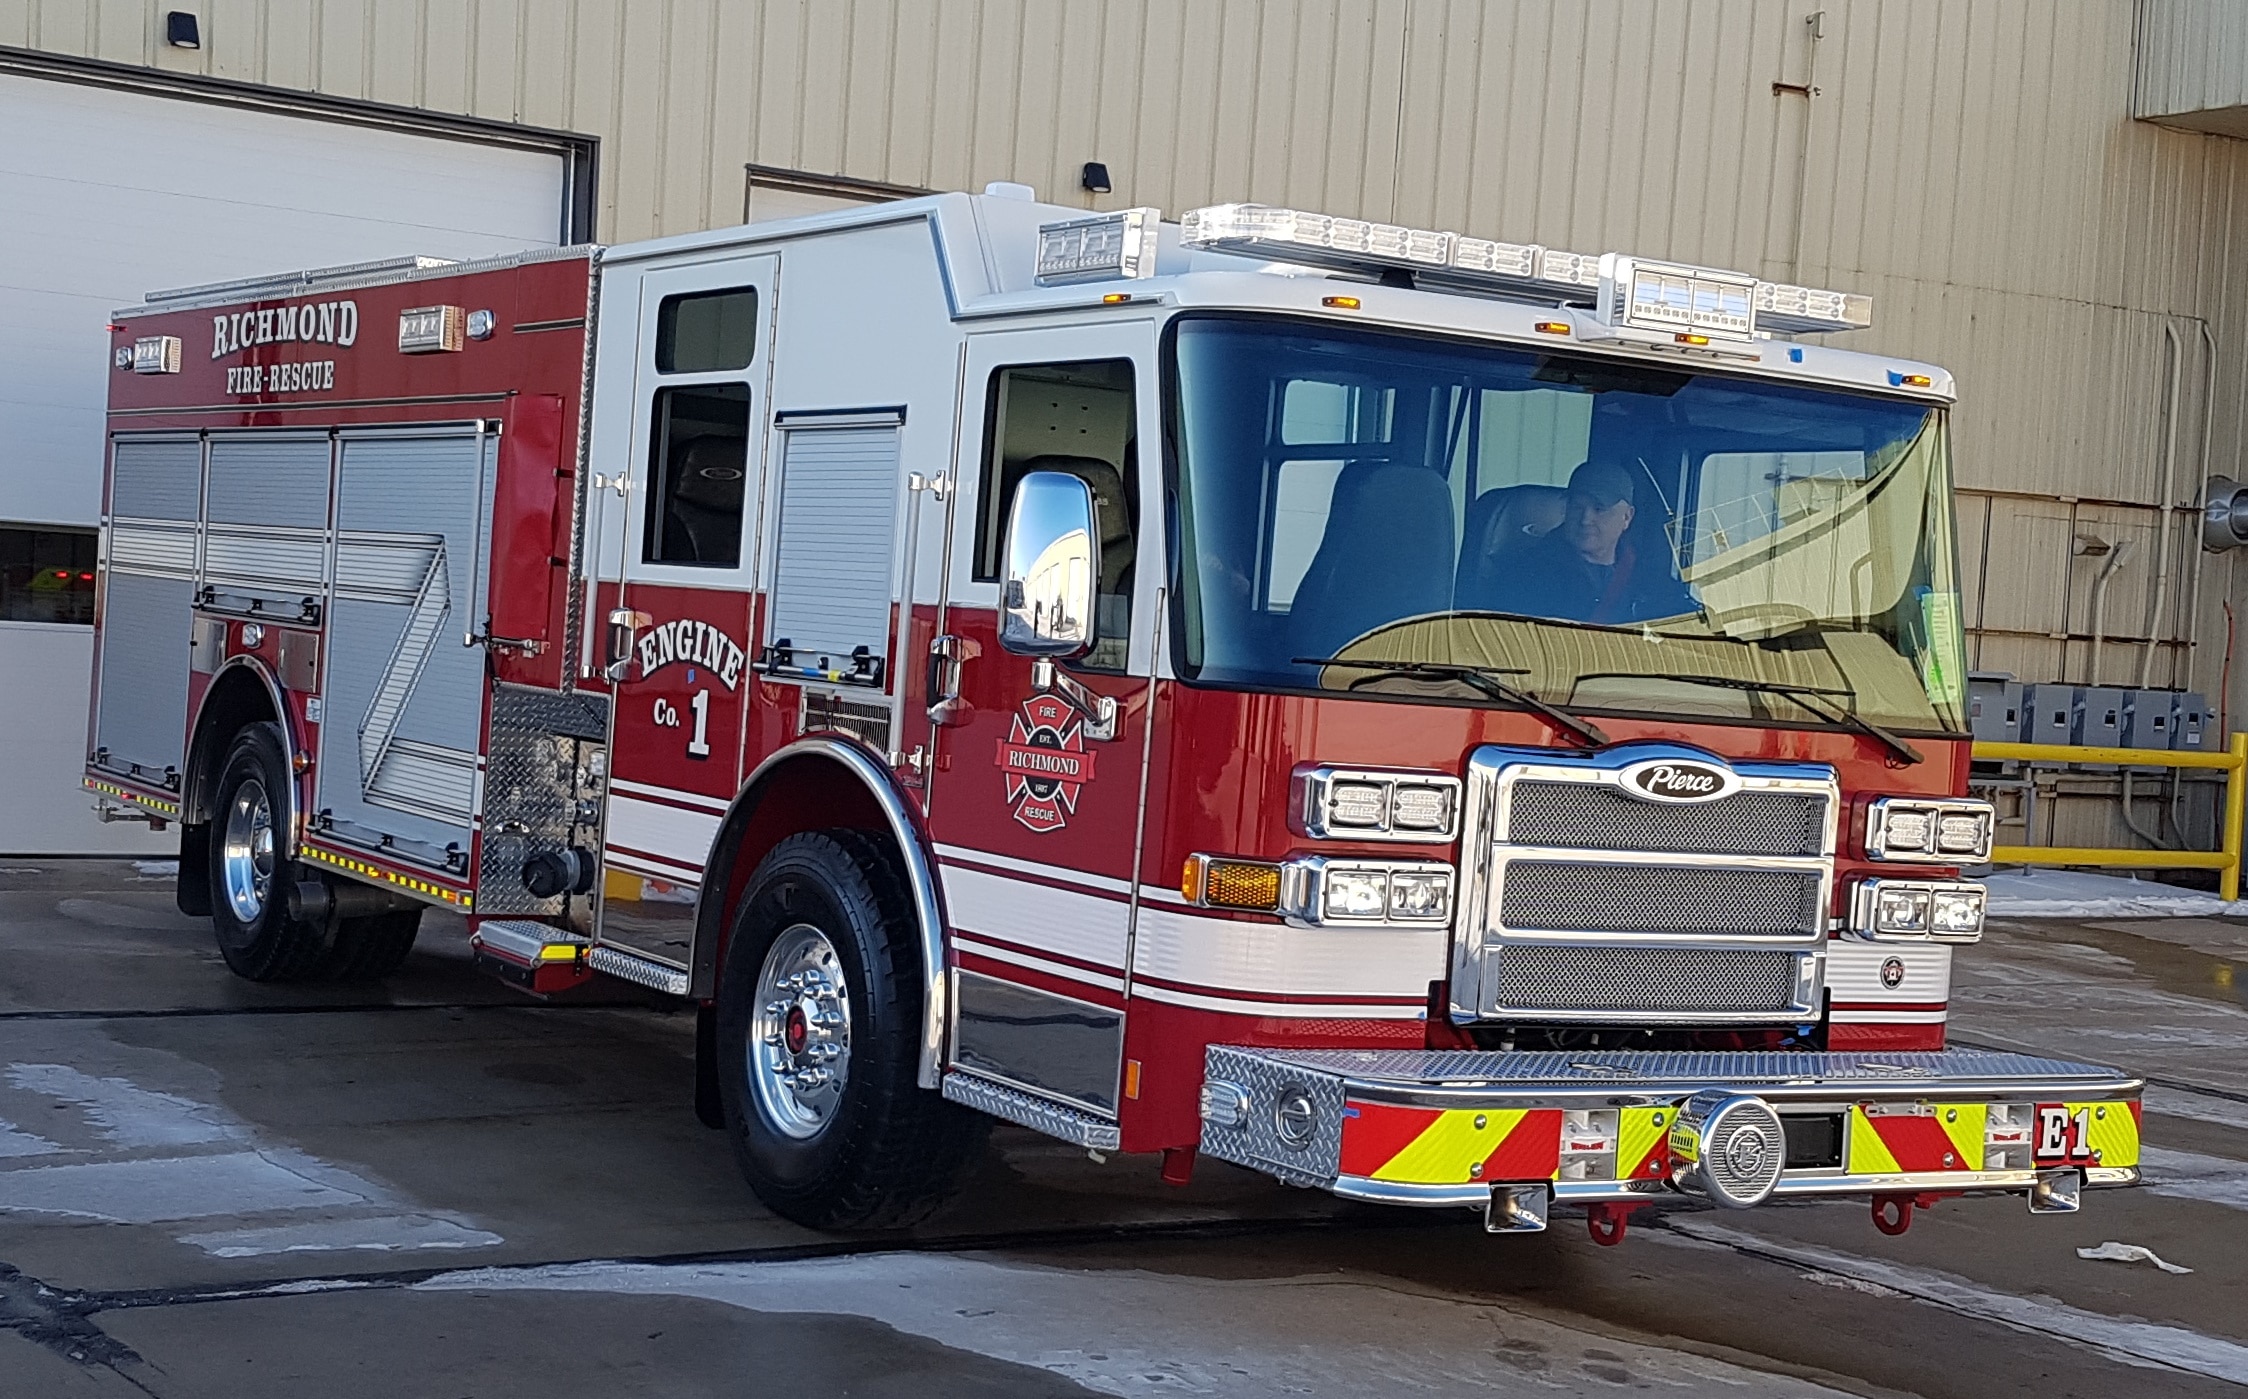 New Fire Truck arrives in Richmond